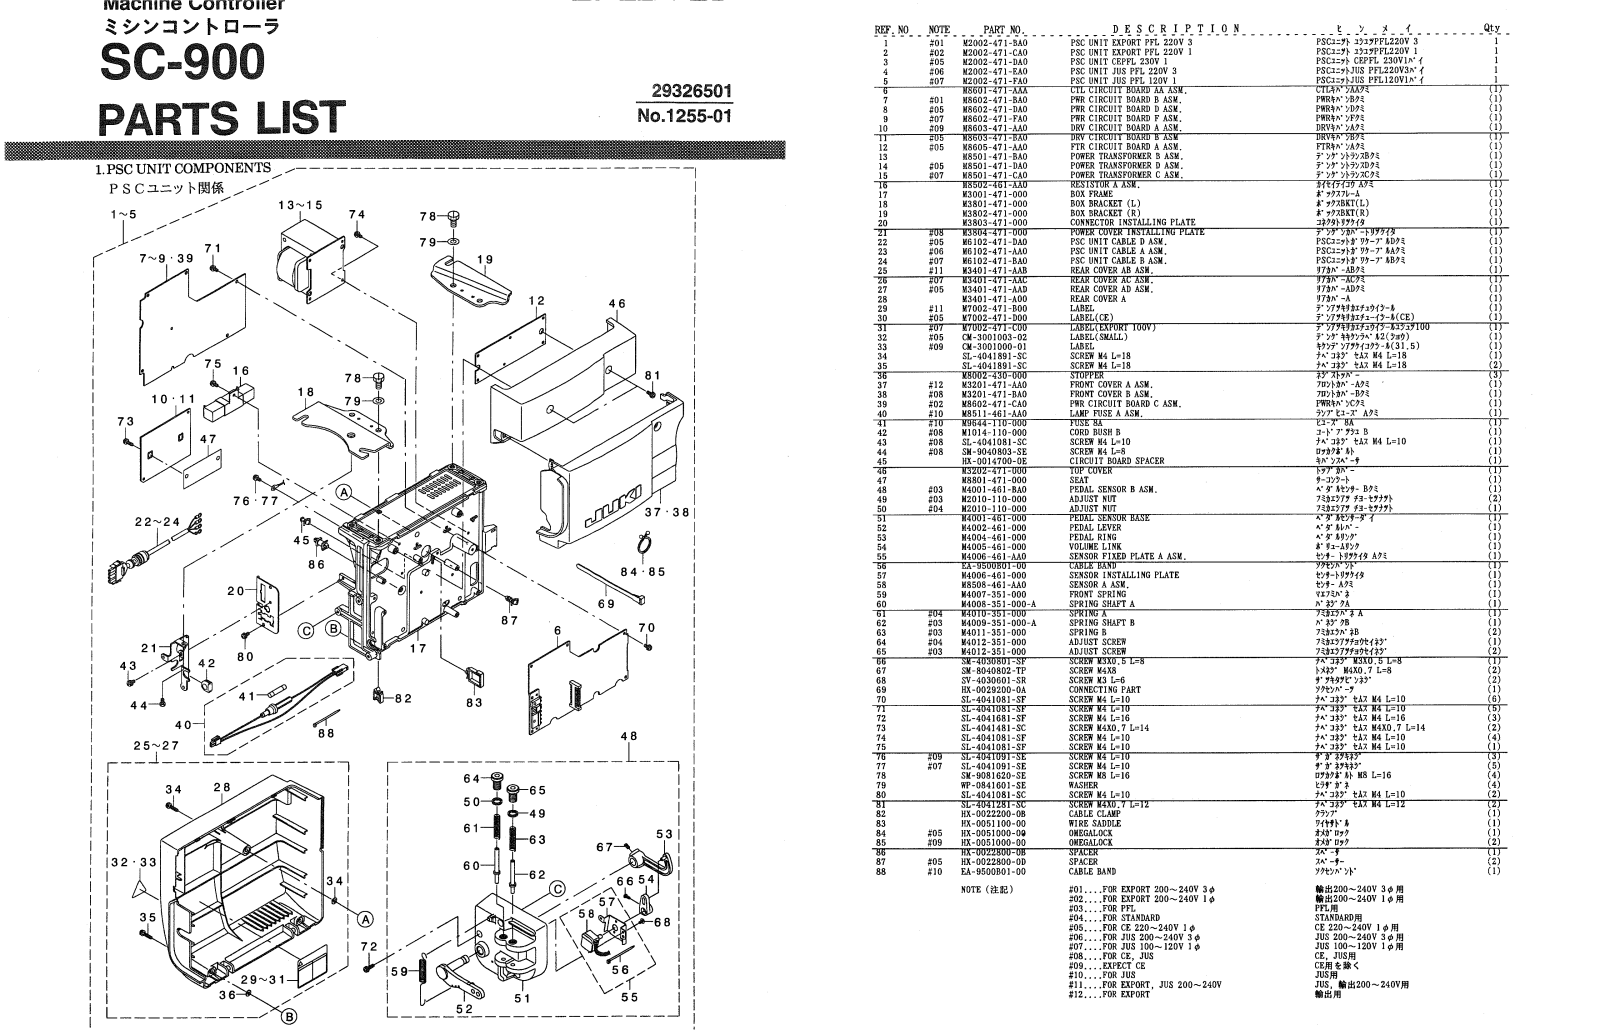 Juki SC-900 Parts List